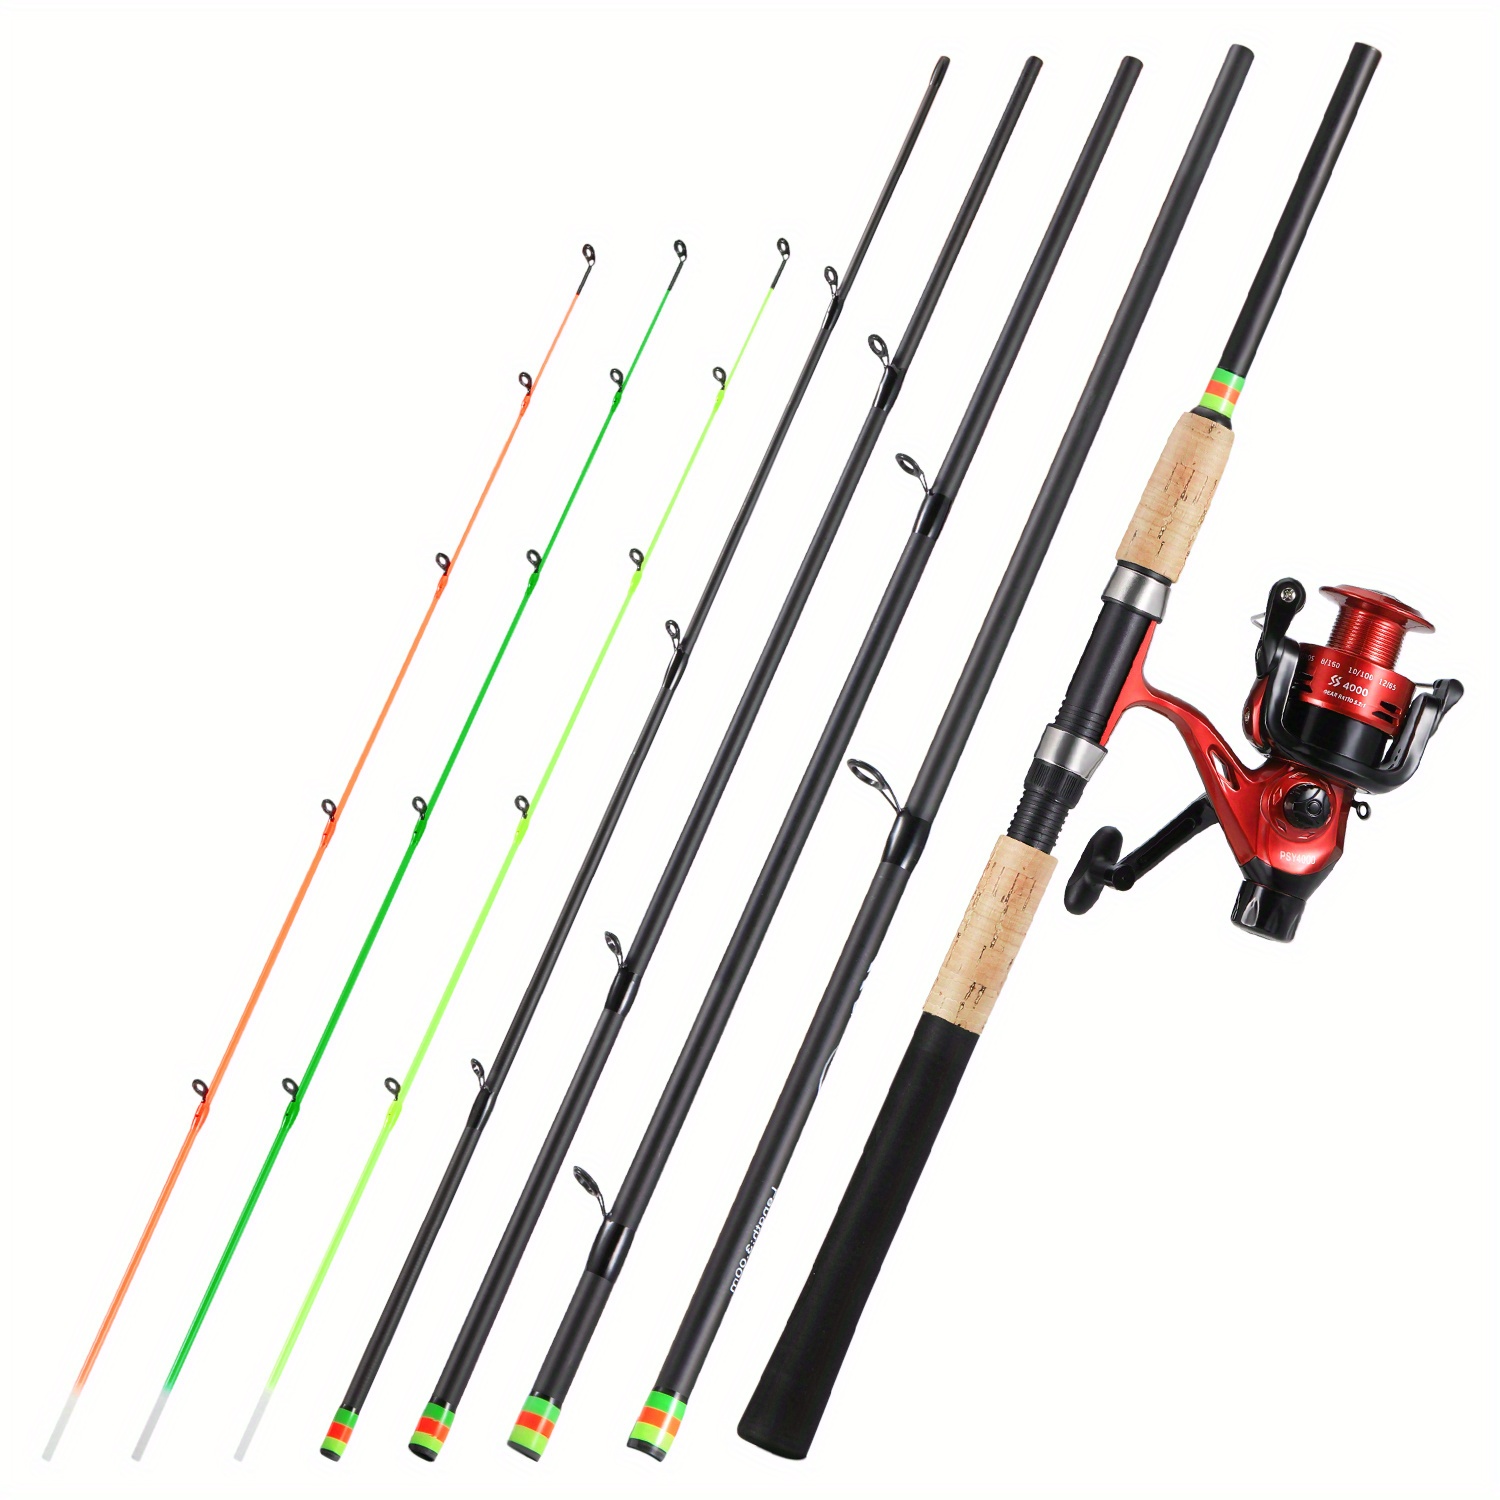 Sougayilang Feeder Carp Fishing Rod Reel Combos 6 Section */9.8ft Feeder  Rod Super Hard Spinning Rod And Spinning Reel For Carp Fishing Kits